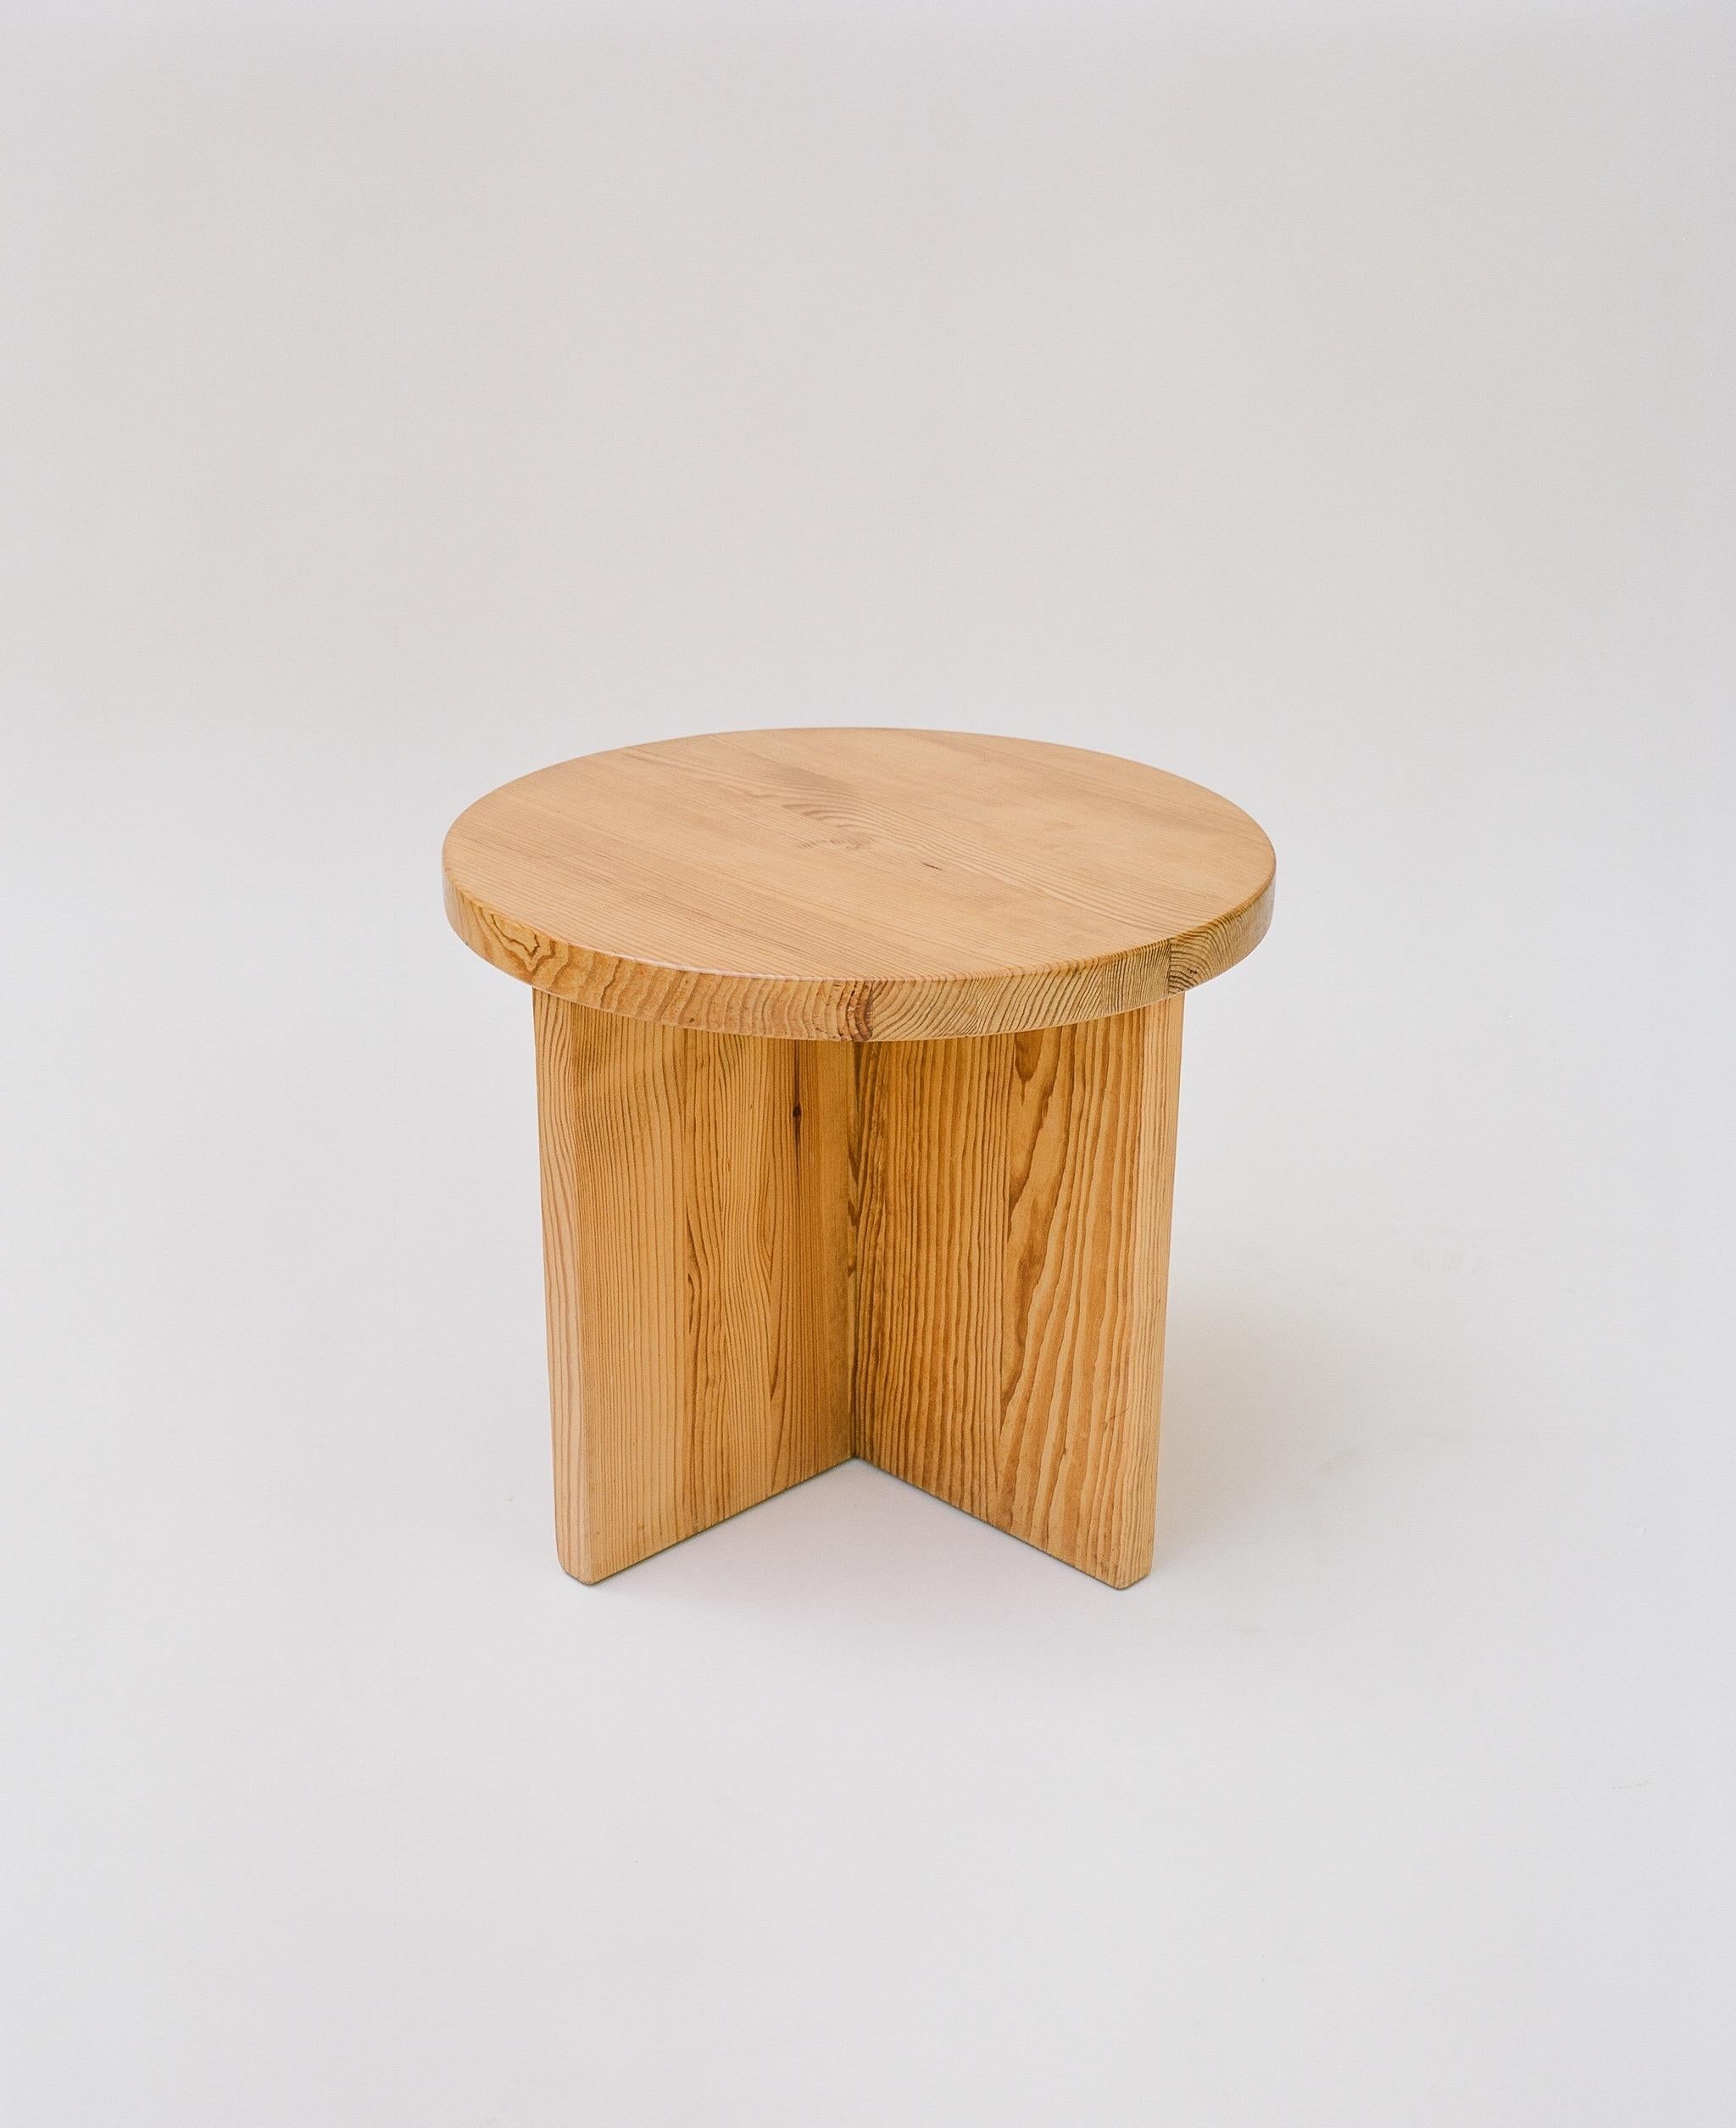 A natural pine wood table designed by Axel Einar Hjorth in 1932 as part of the 'Lovö' collection of furniture produced by NK Nordiska Kompaniet. 
Literature: Christian Björk, Thomas Ekström & Eric Ericson, 'Axel Einar Hjorth - Möbelarkitekt',